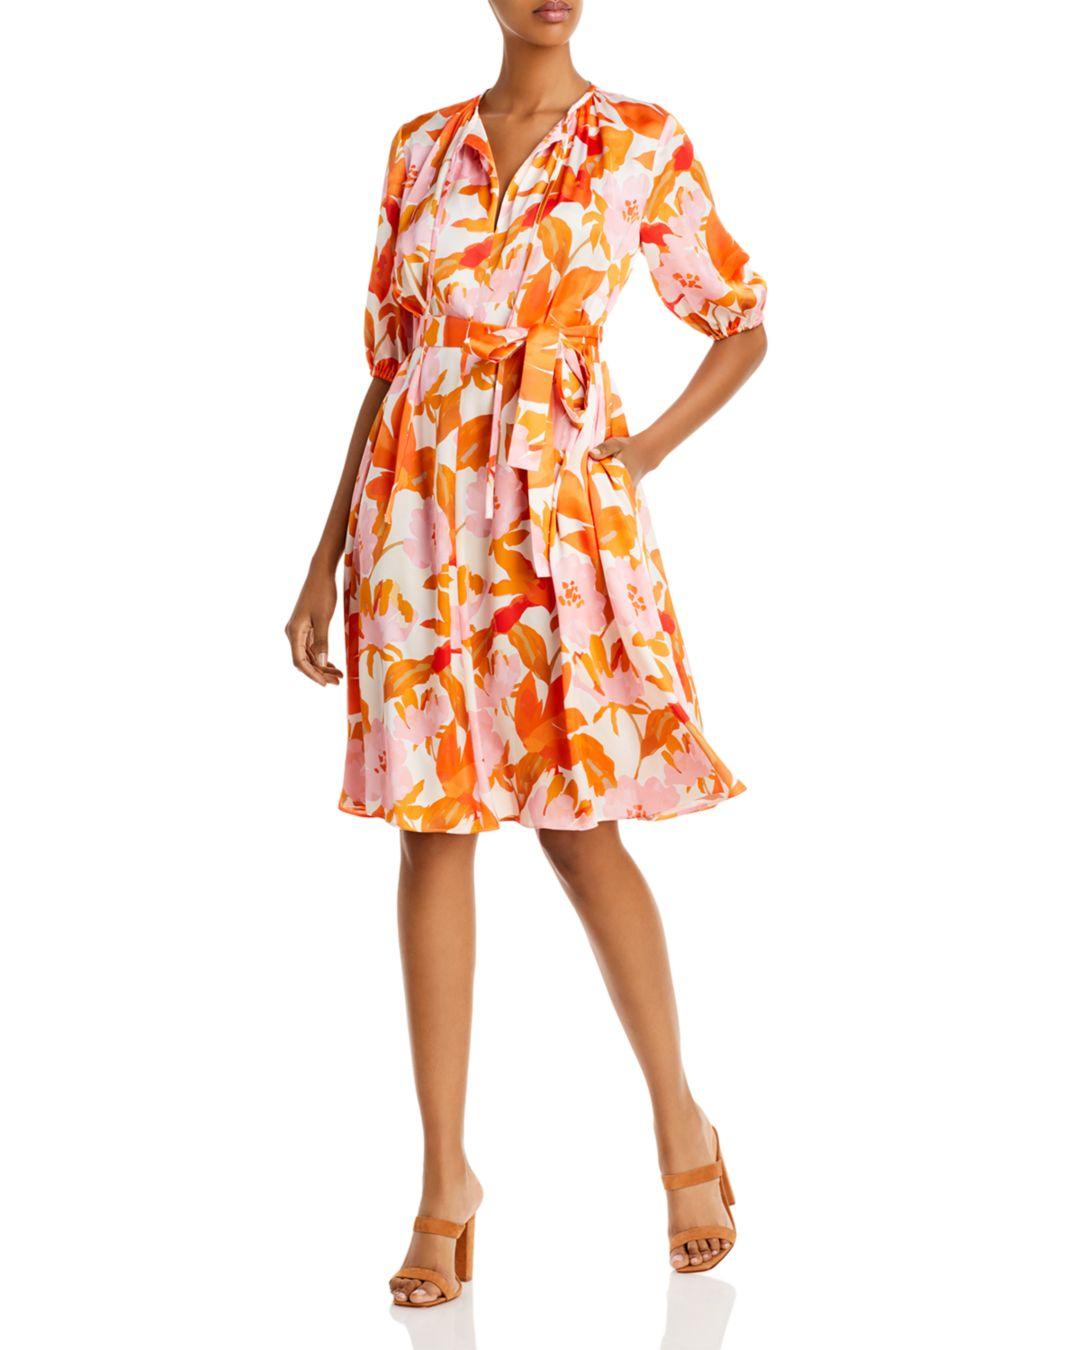 BOSS by HUGO BOSS Daesala Floral Satin Dress in Orange | Lyst Canada